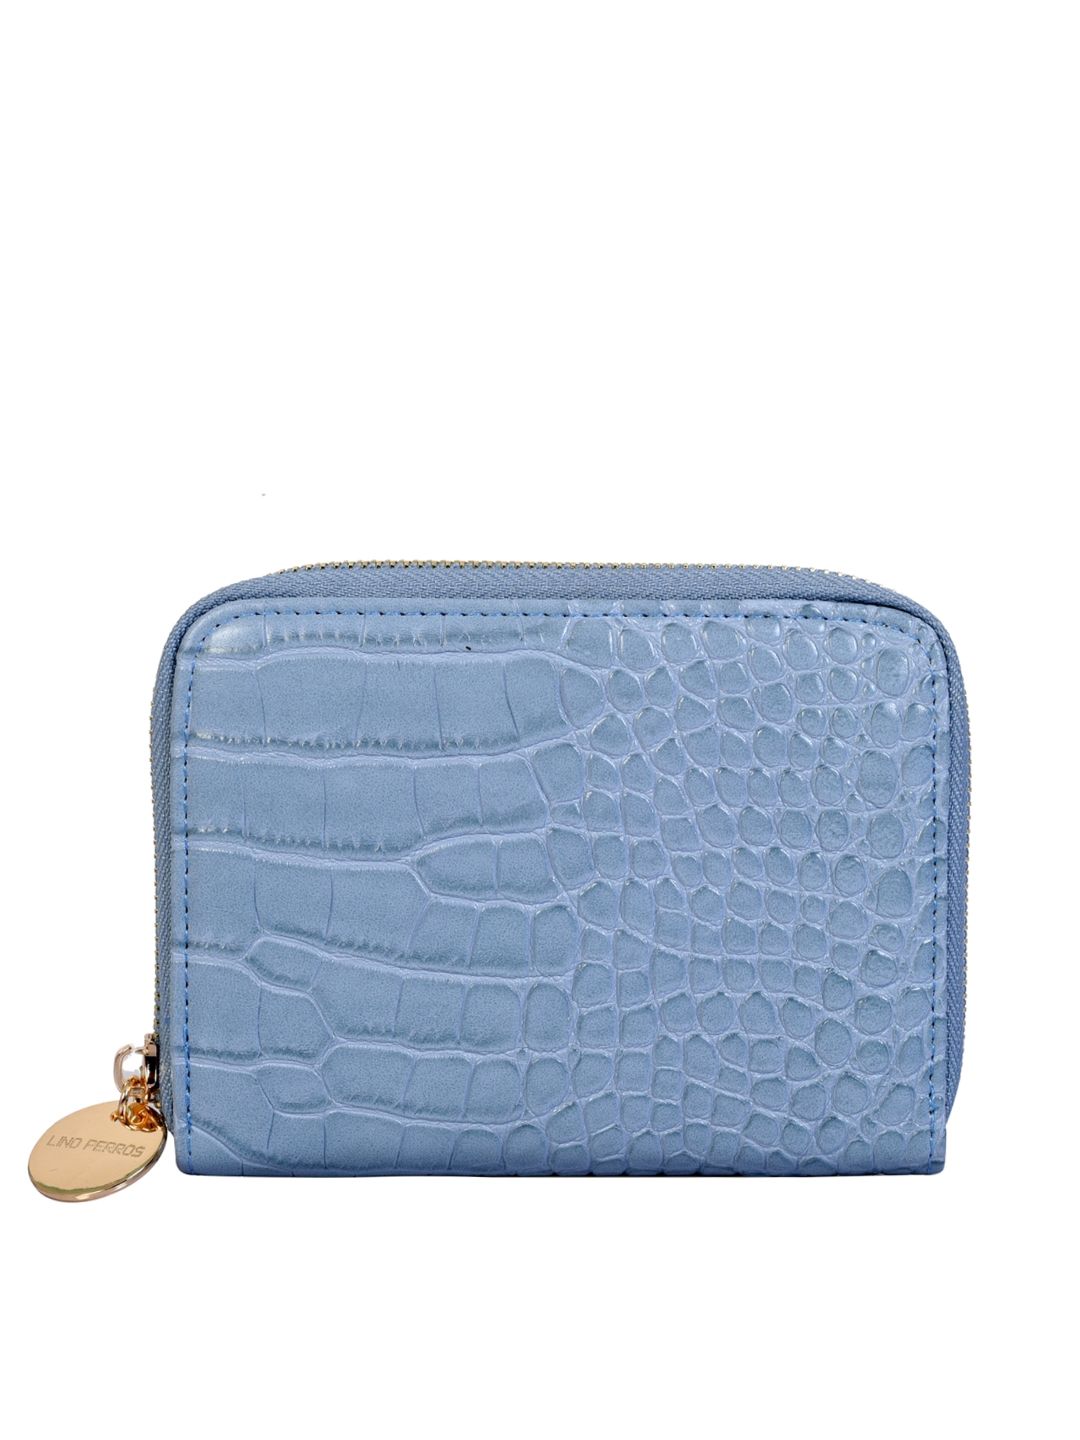 Lino Perros Women Blue Croc & Snakeskin Textured Zip Around Wallet Price in India